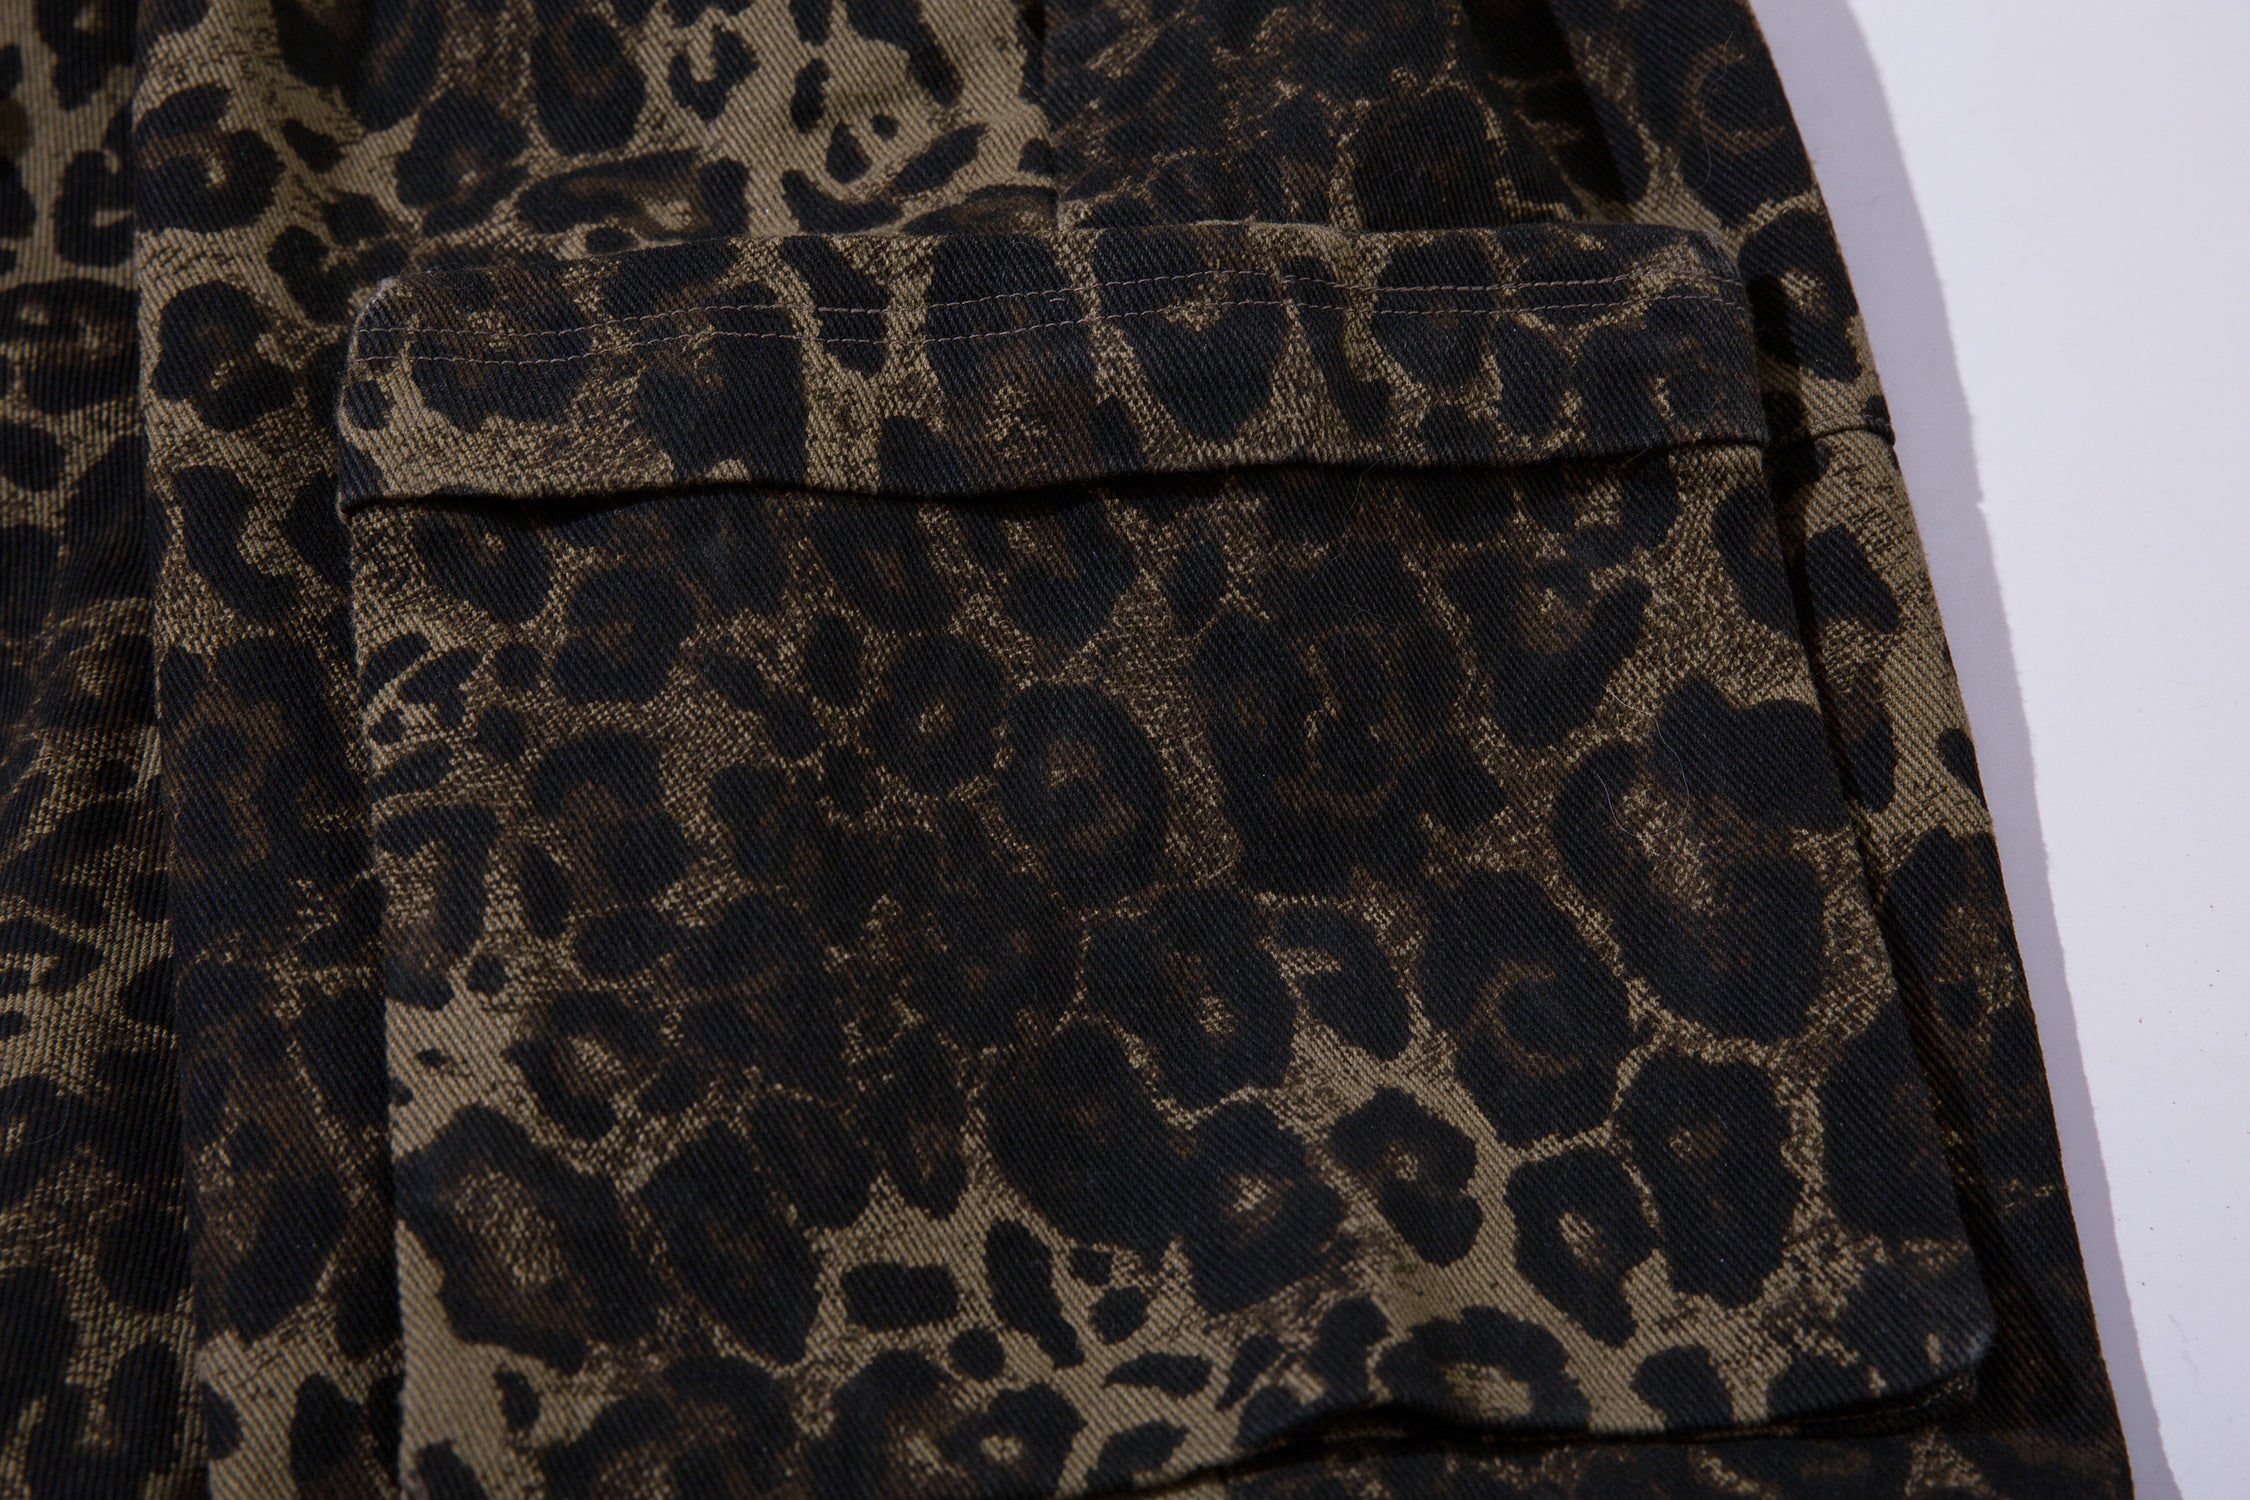 'Leopard' Shorts - Santo 